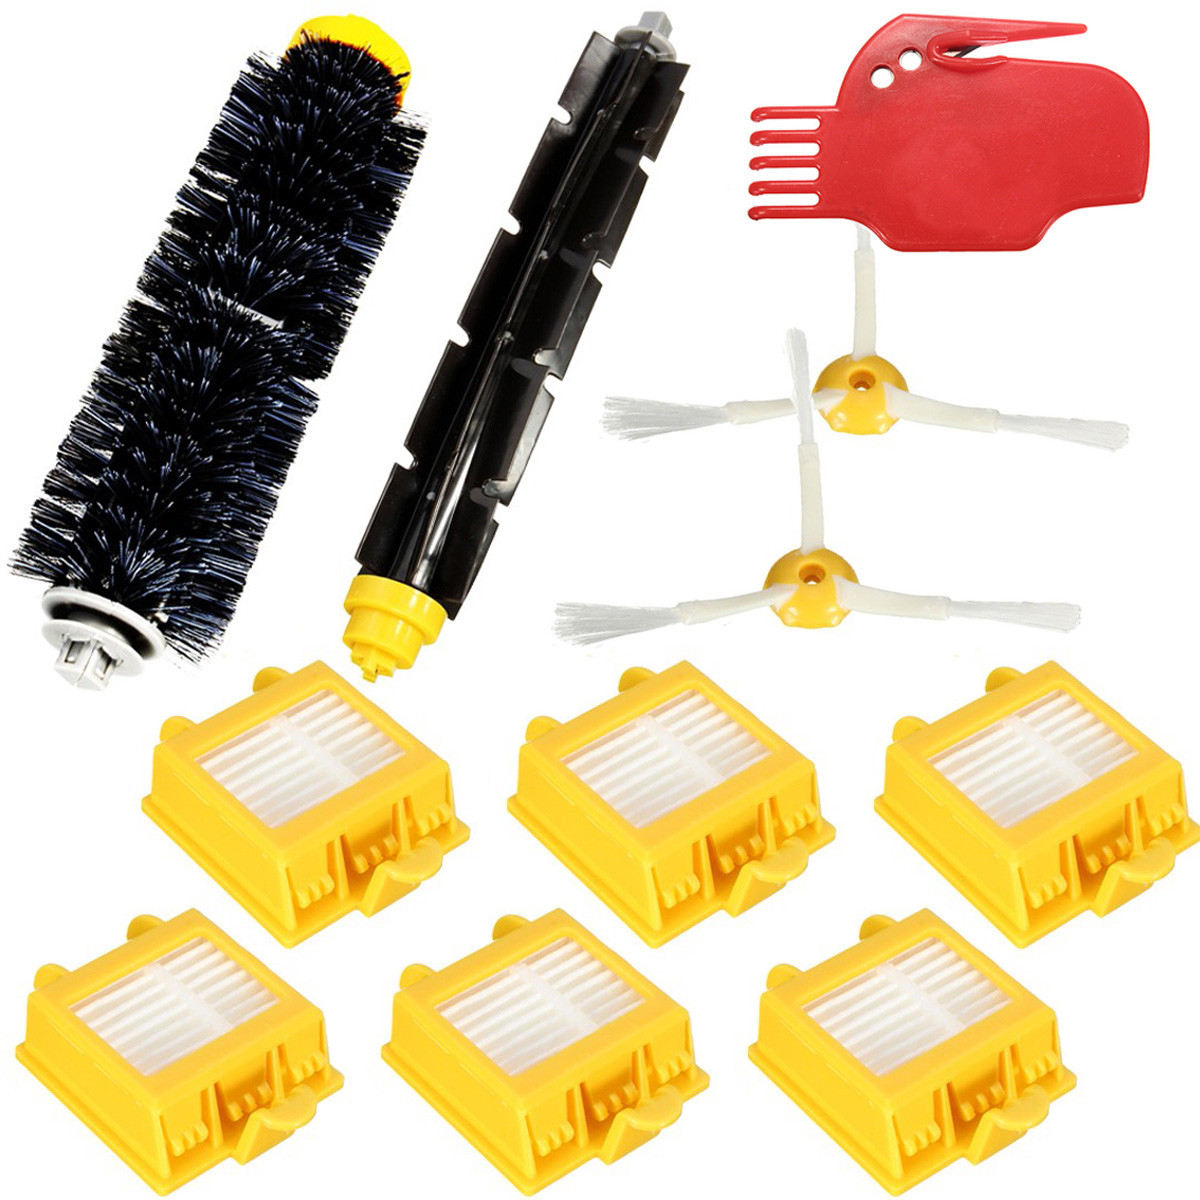 

11Pcs Vacuum Cleaner Filters Brush Pack Kit For iRobot Roomba 700 Series 760 770 780 790